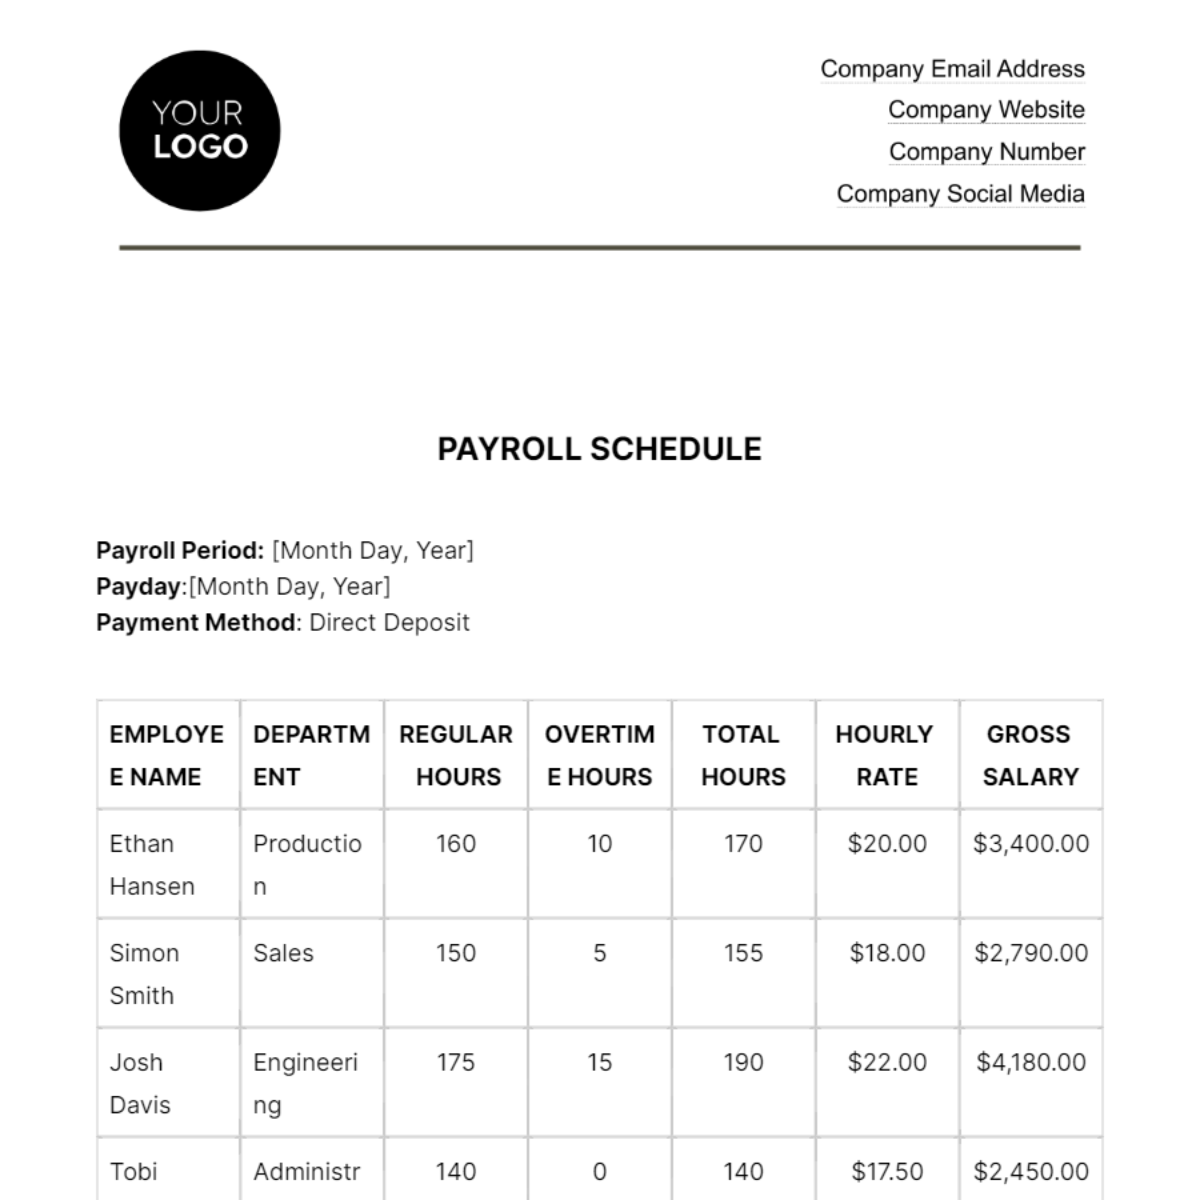 Payroll Schedule HR Template